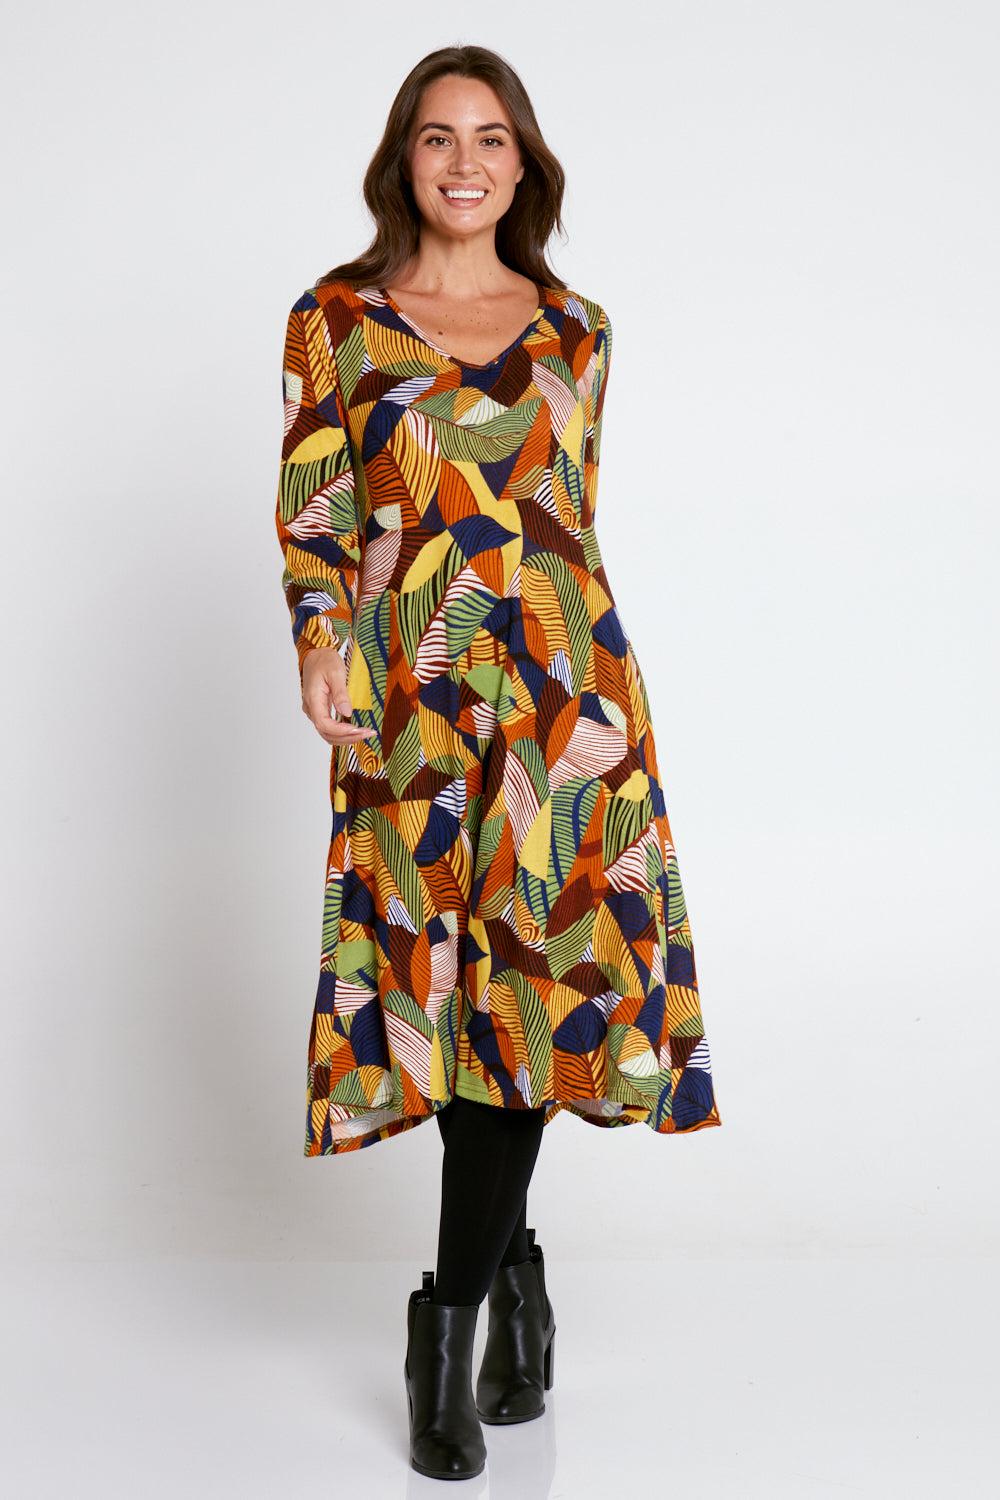 Christobel Winter Knit Dress - Autumnal